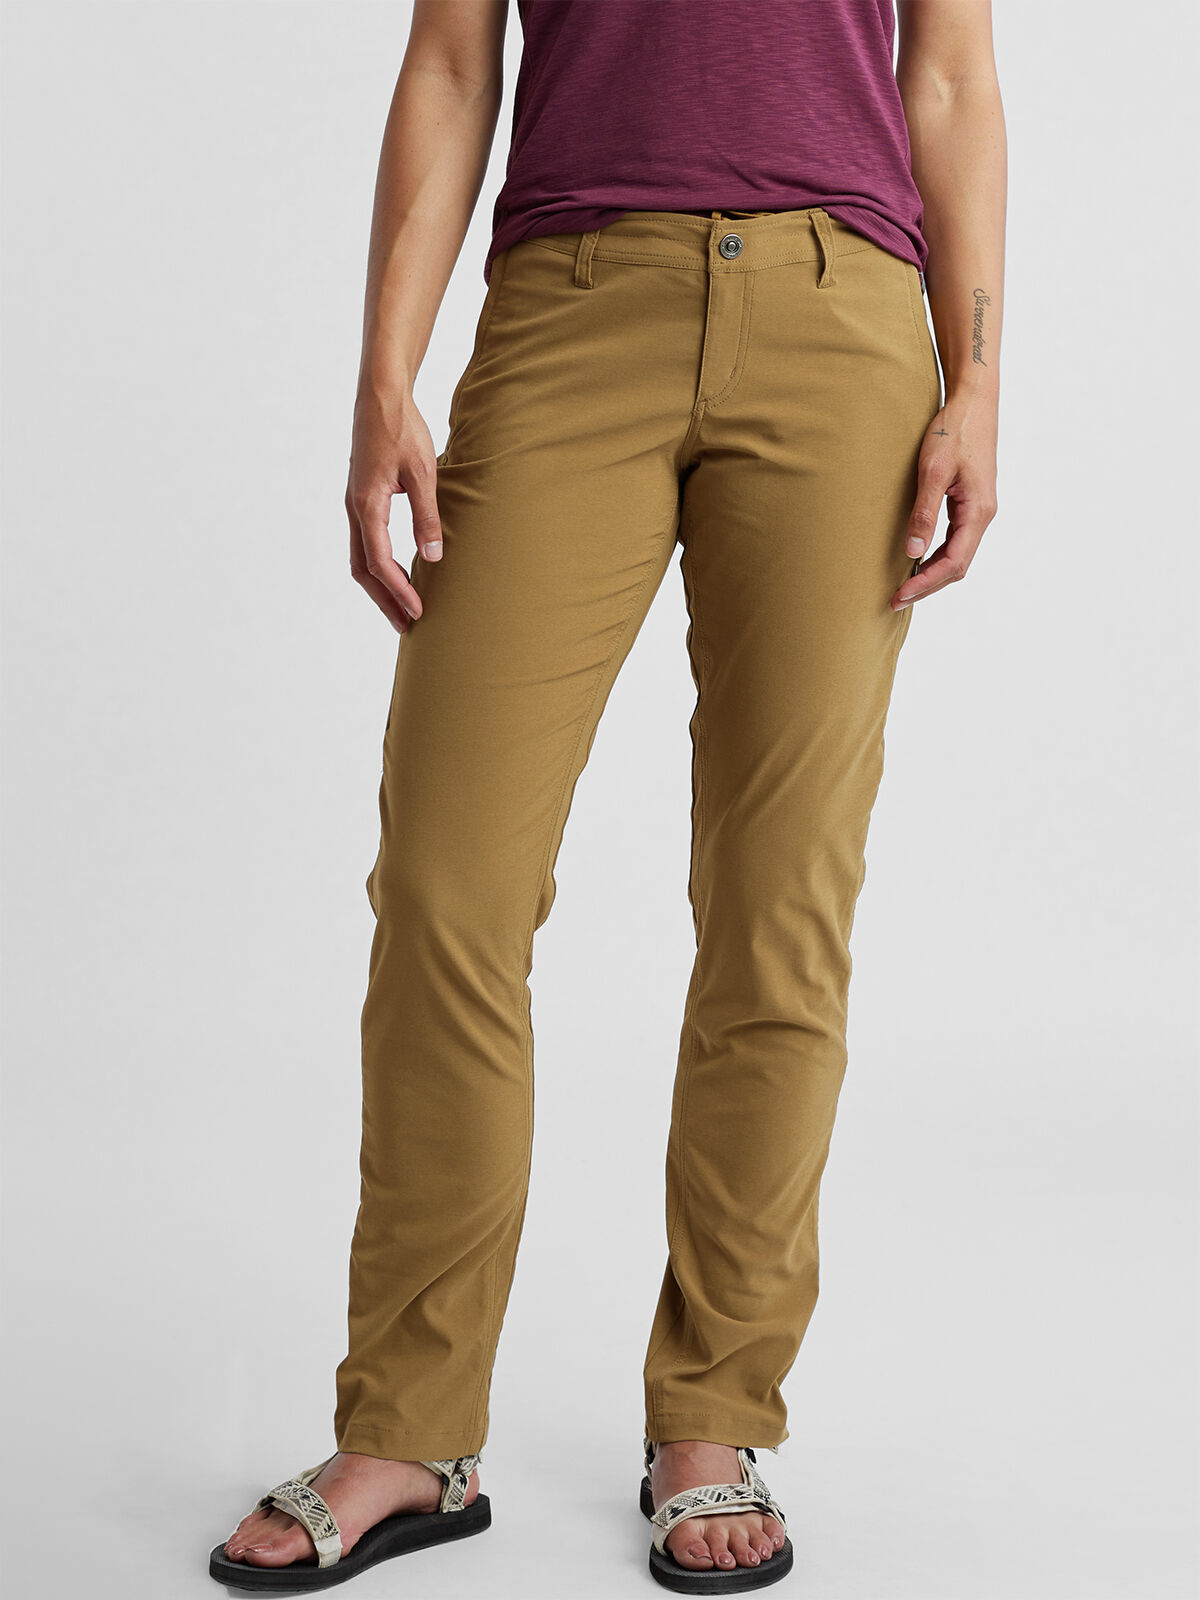 Details 164+ brown hiking pants